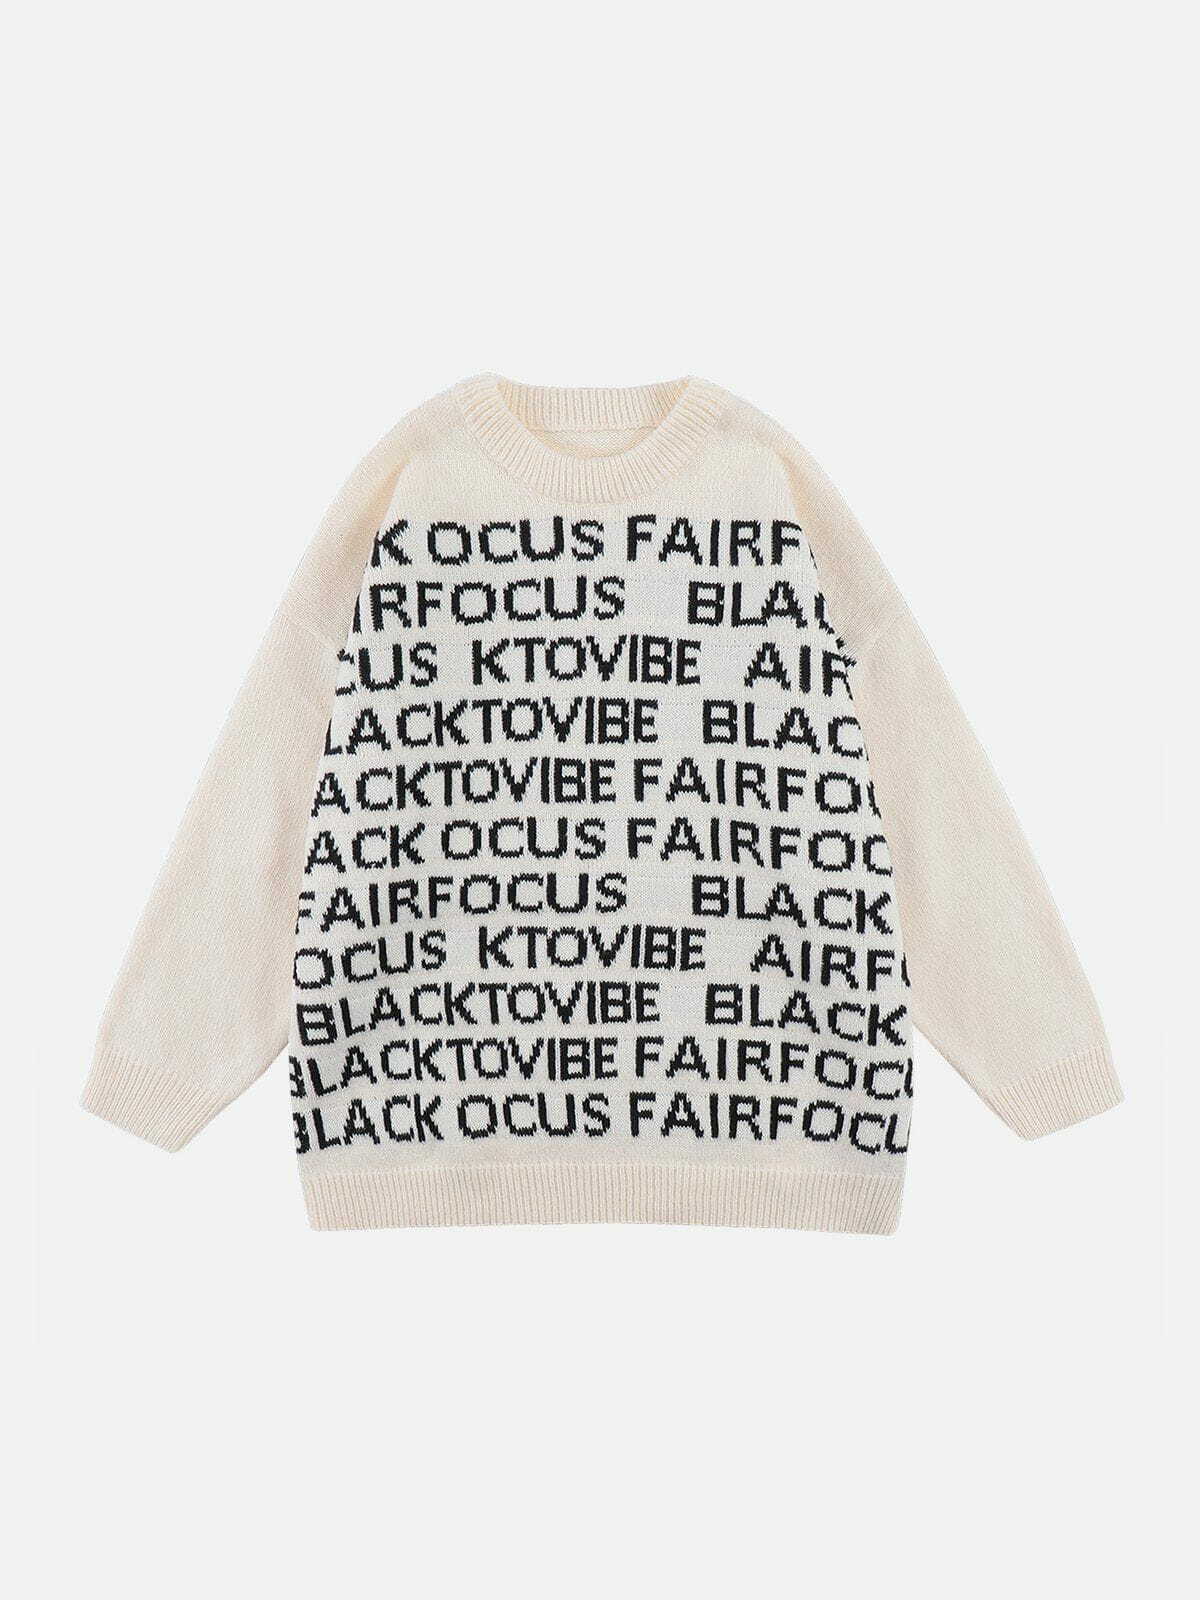 retro alphabet sweater edgy & vibrant streetwear 8471